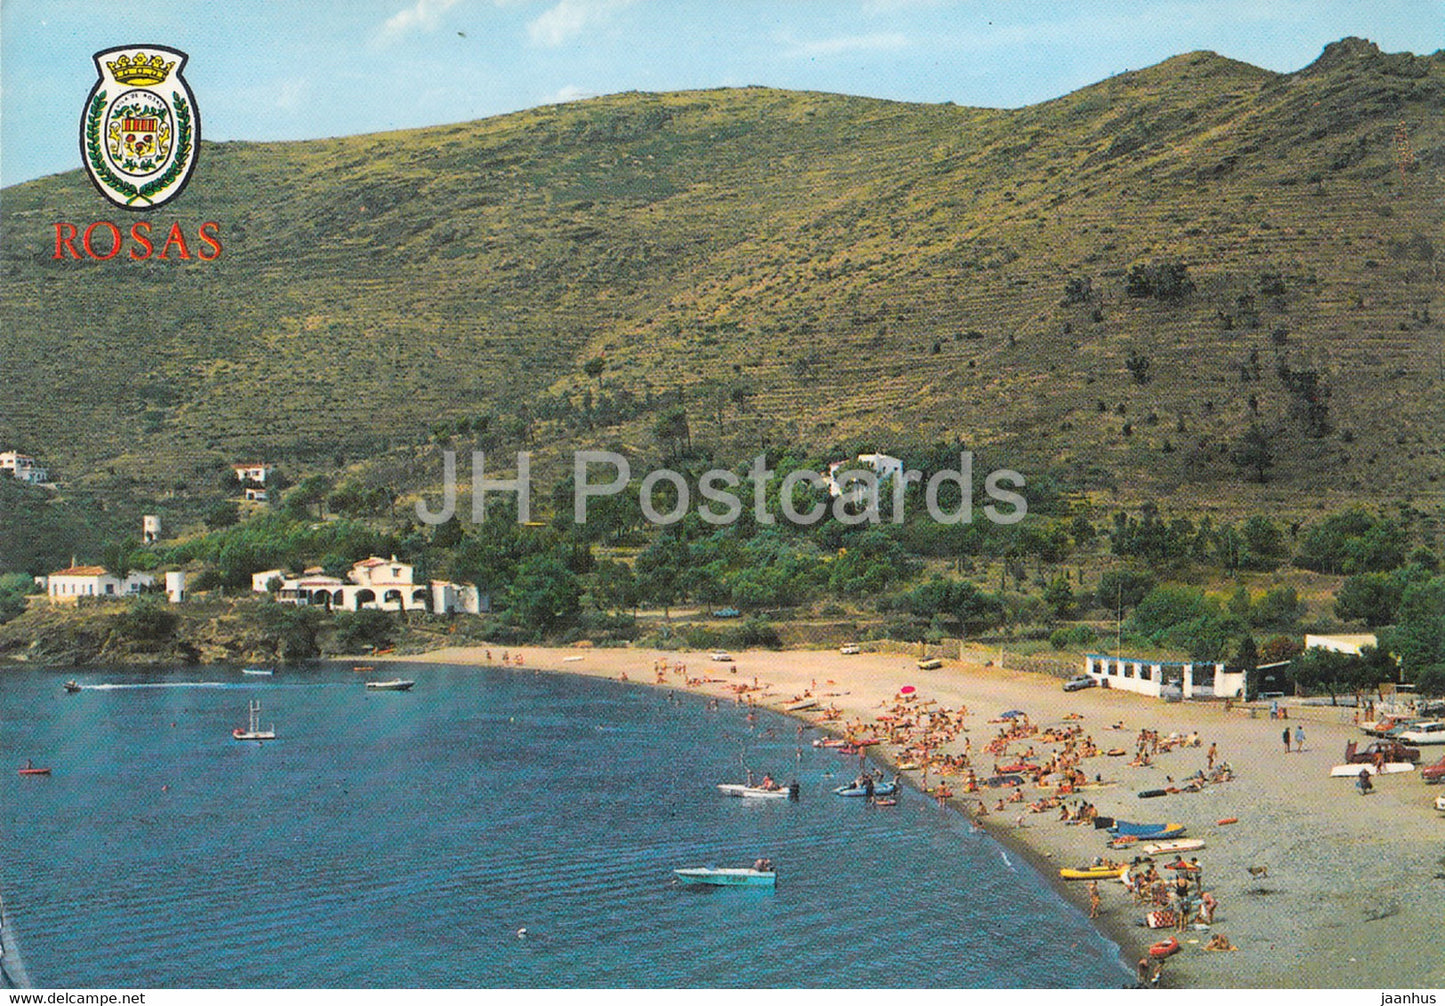 Rosas - Costa Brava - Playa de Cala Montjoy - beach - 150 - 1978 - Spain - used - JH Postcards